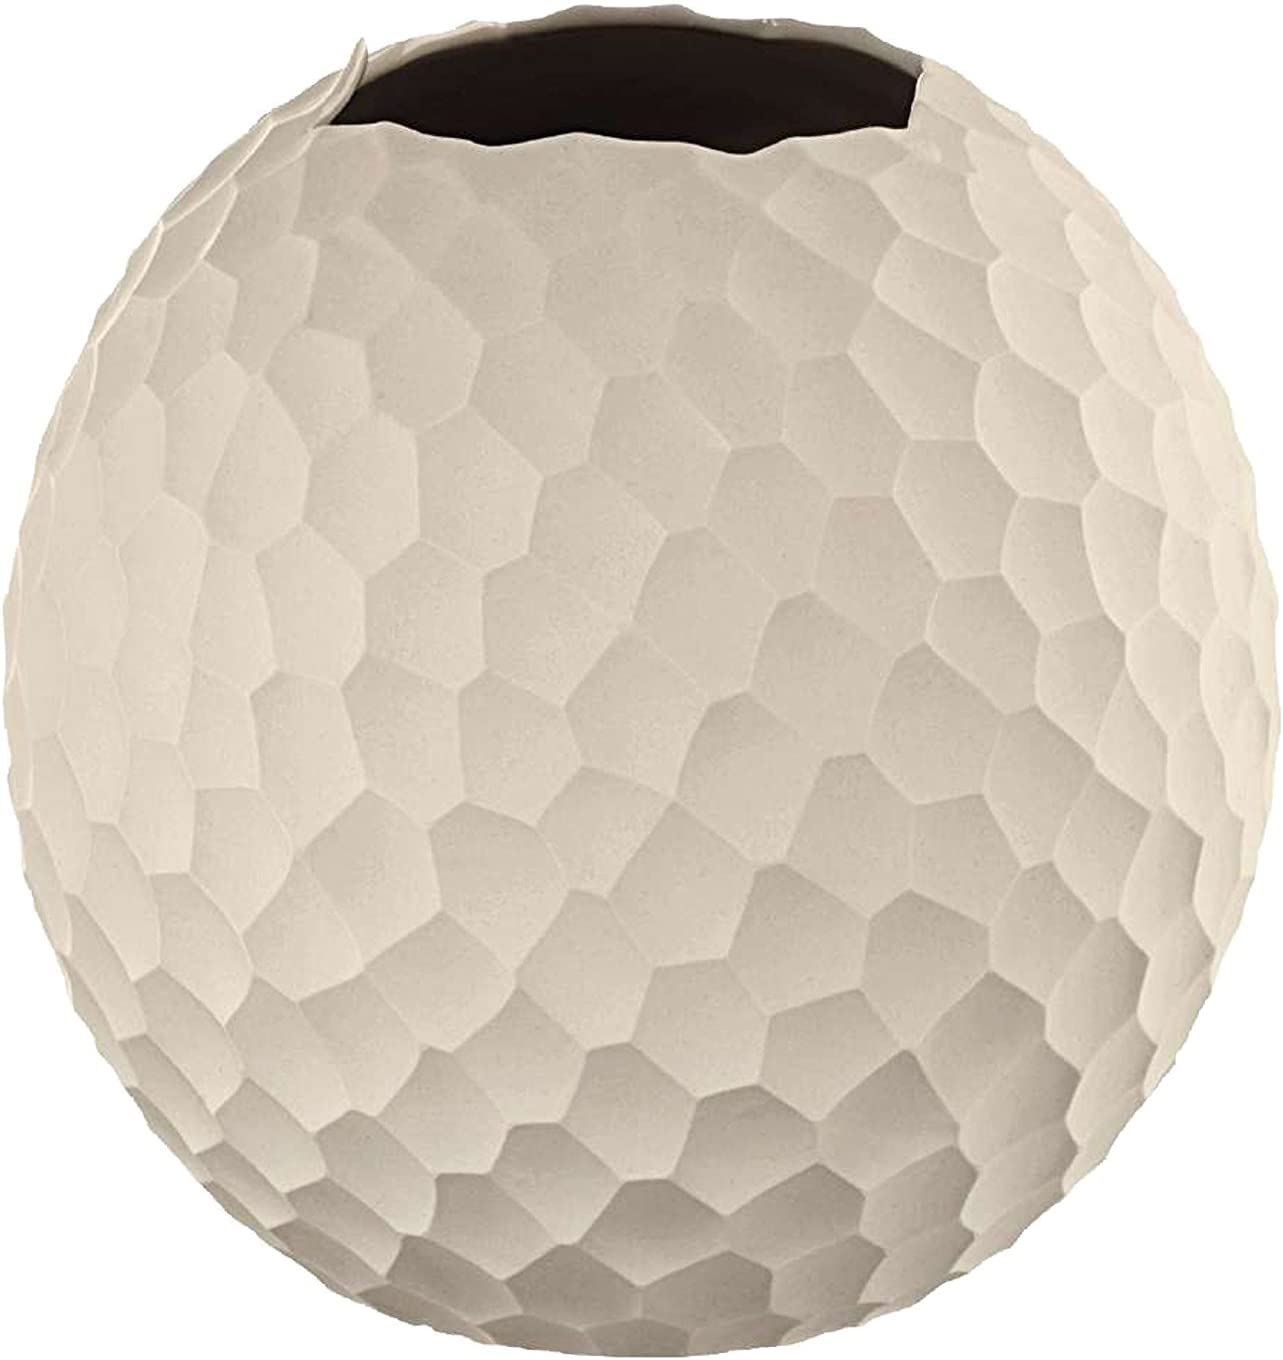 ASA 1340011 Ceramic Ball Vase